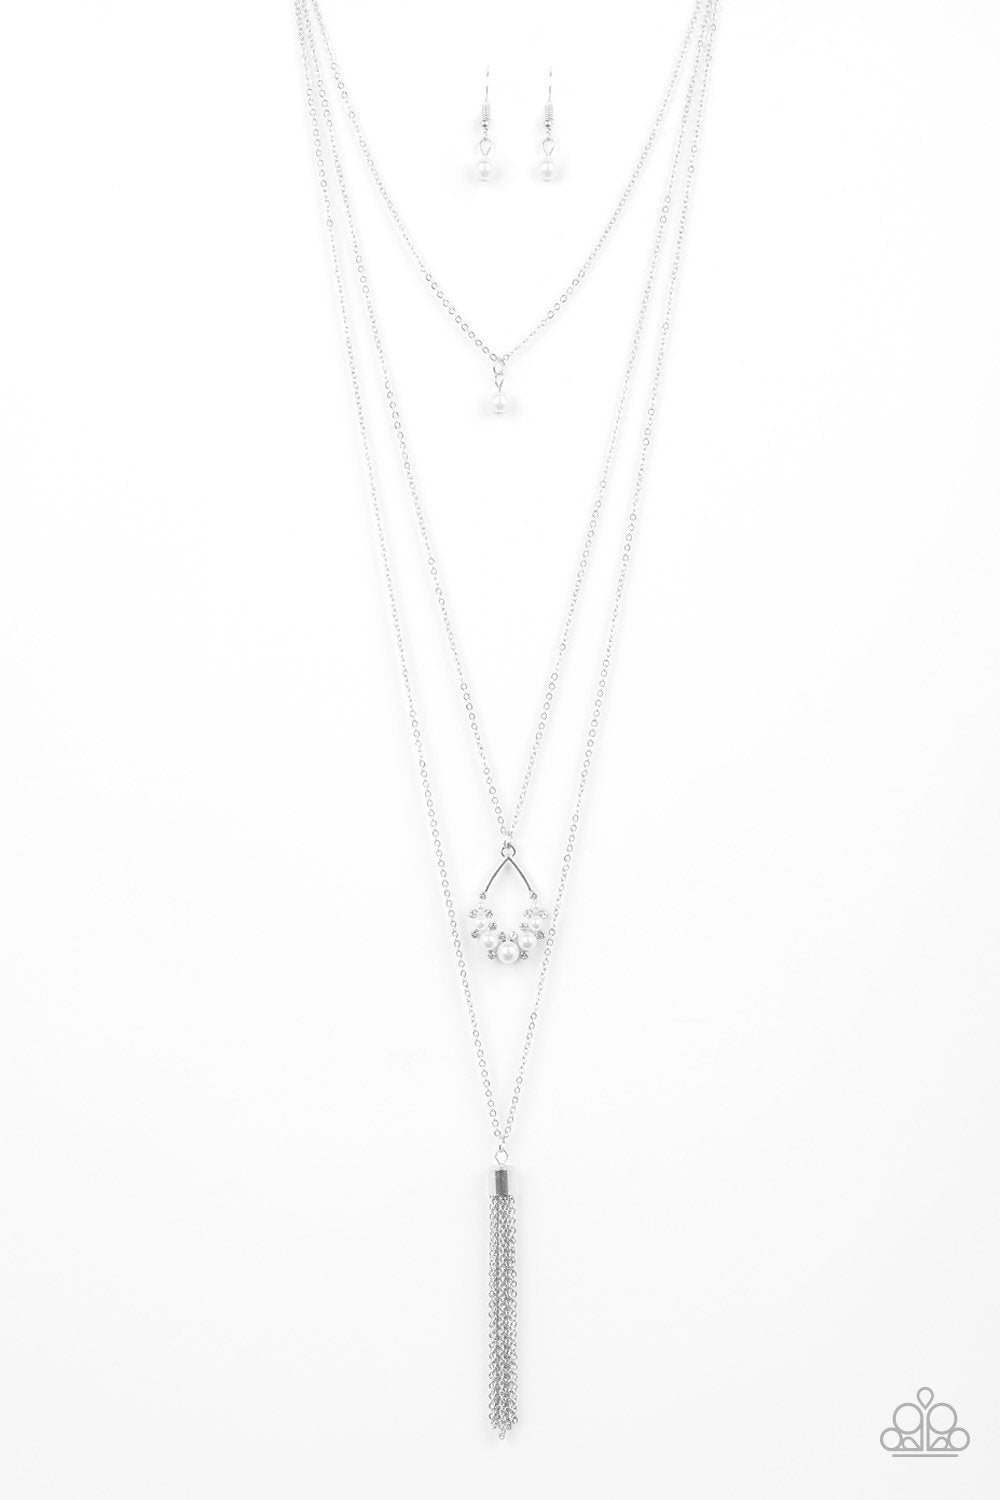 Be Fancy White Necklace freeshipping - JewLz4u Gemstone Gallery